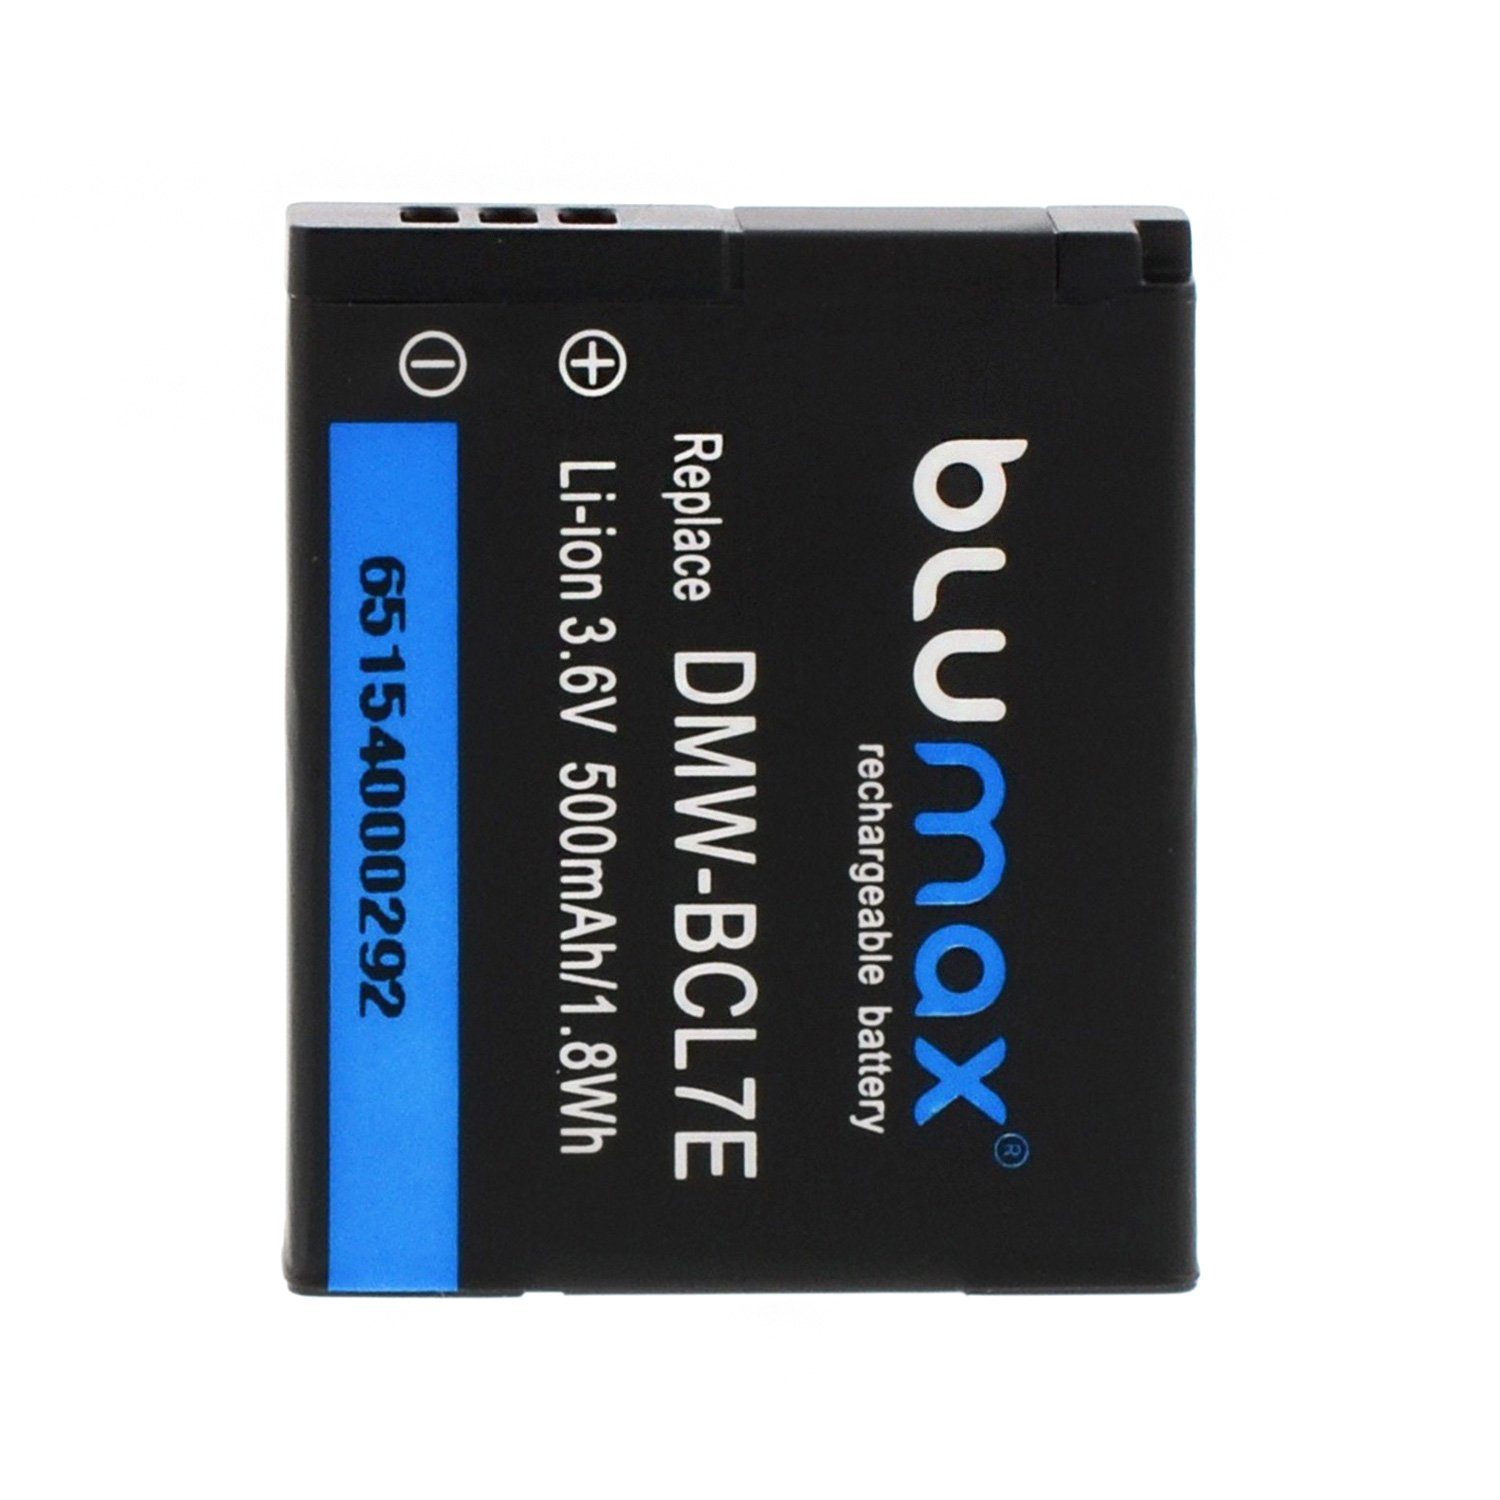 DMW-BCL7 für Panasonic Kamera-Akku Blumax (3,6V) Akku passend mAh 500